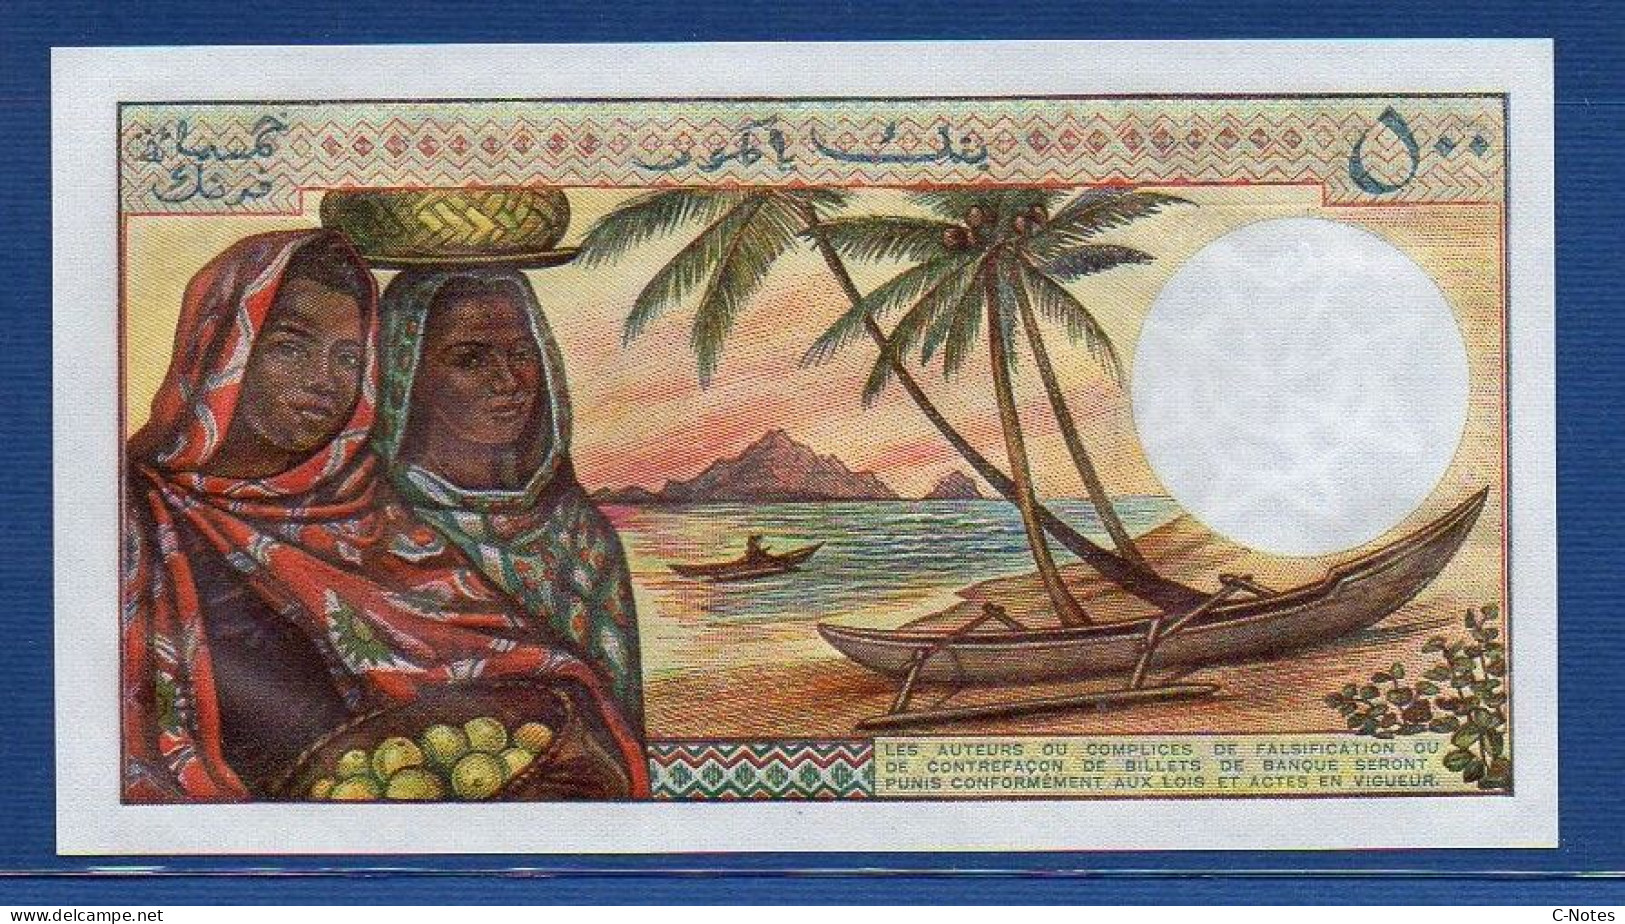 COMOROS - P. 7a2 – 500 Francs ND (1976) UNC, S/n Z.1 00875 - Comores